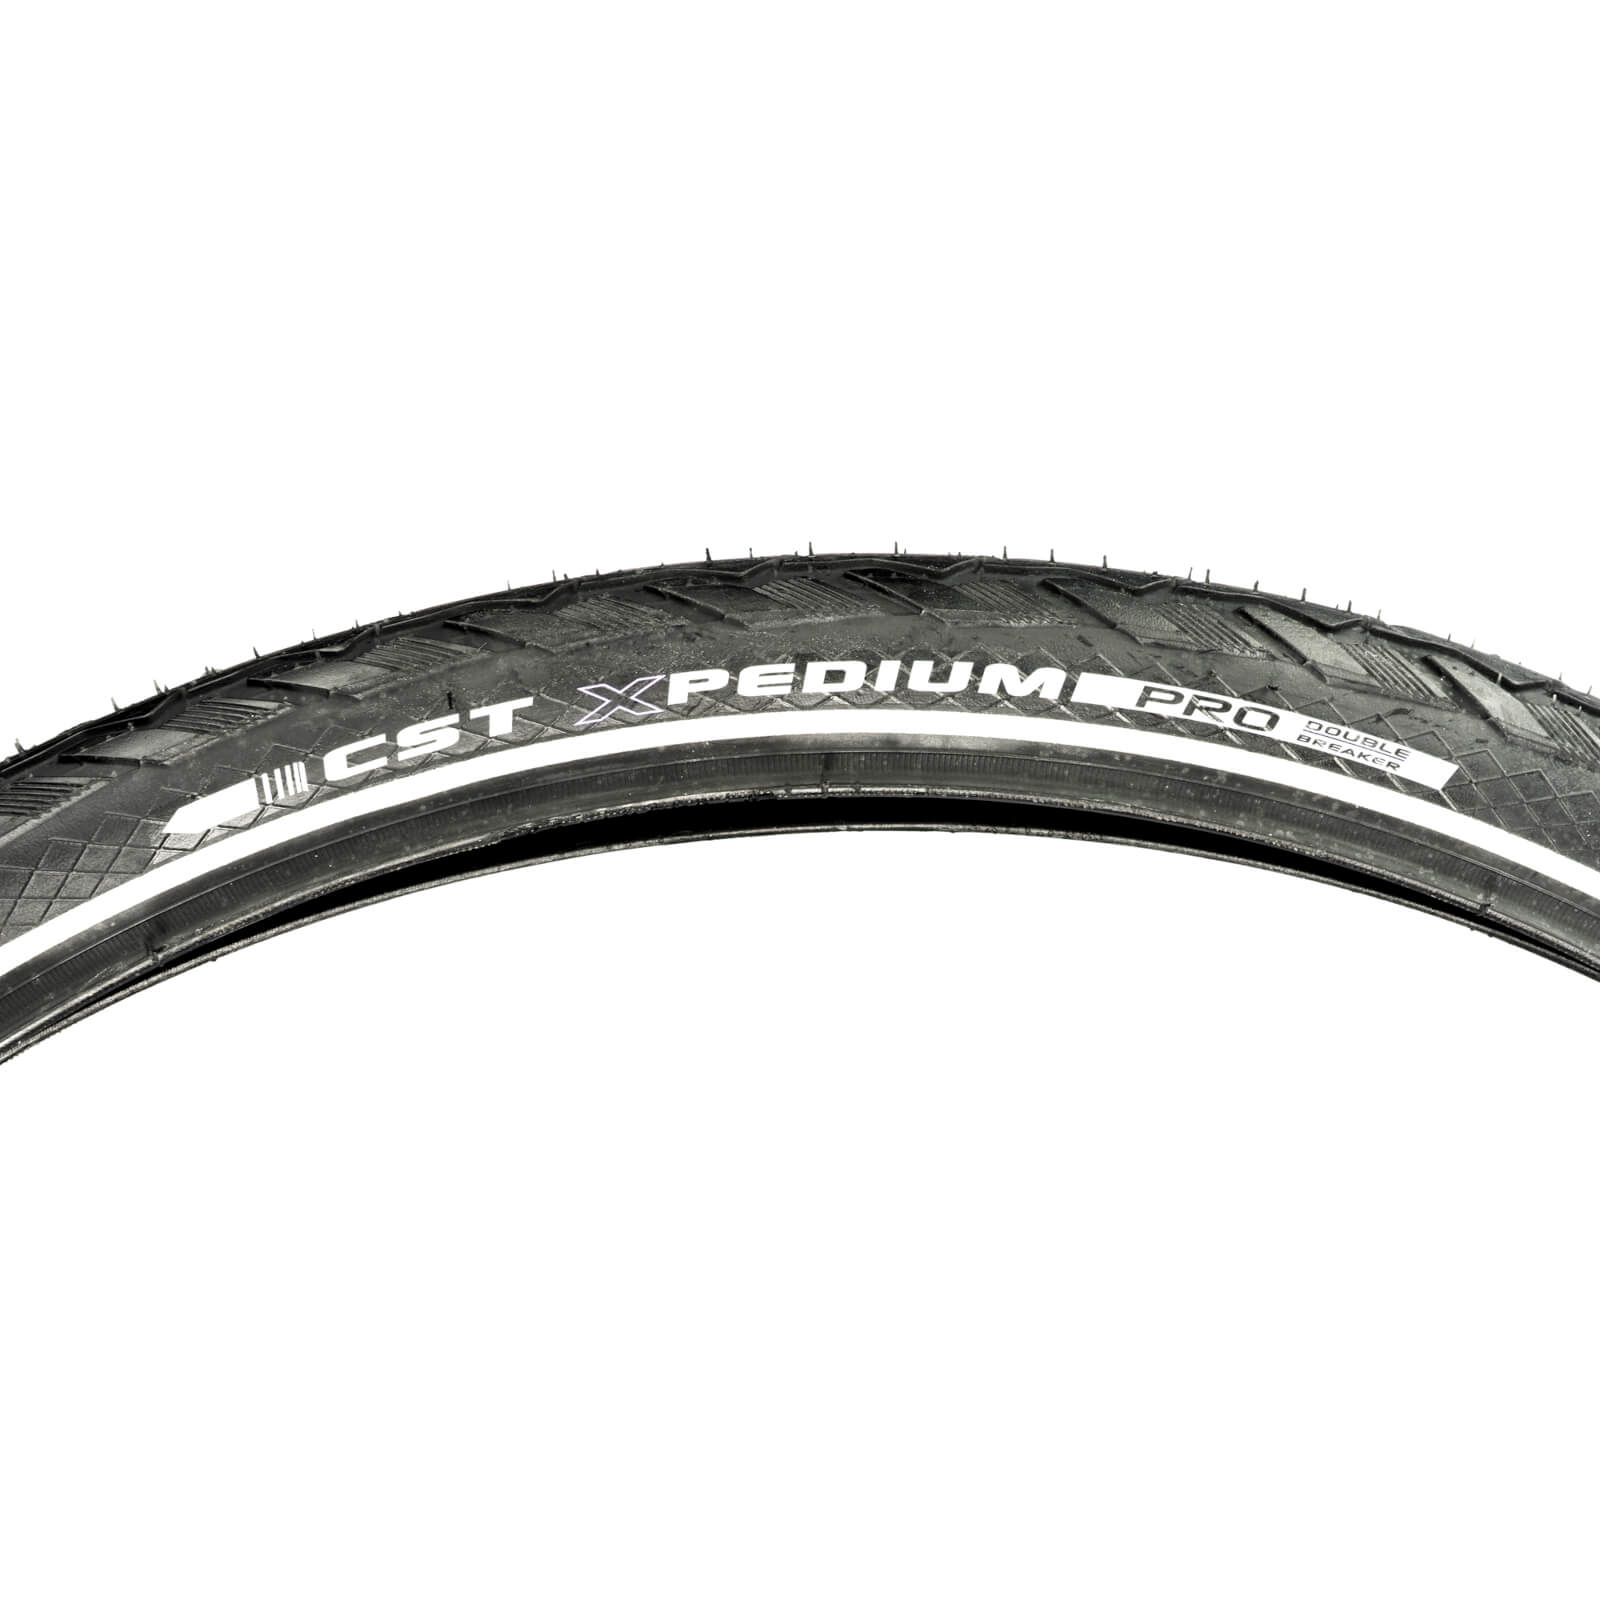 CST Xpedium Level 6 Single Compound Wire DB 700c Clincher Bike Tyre 700x38c